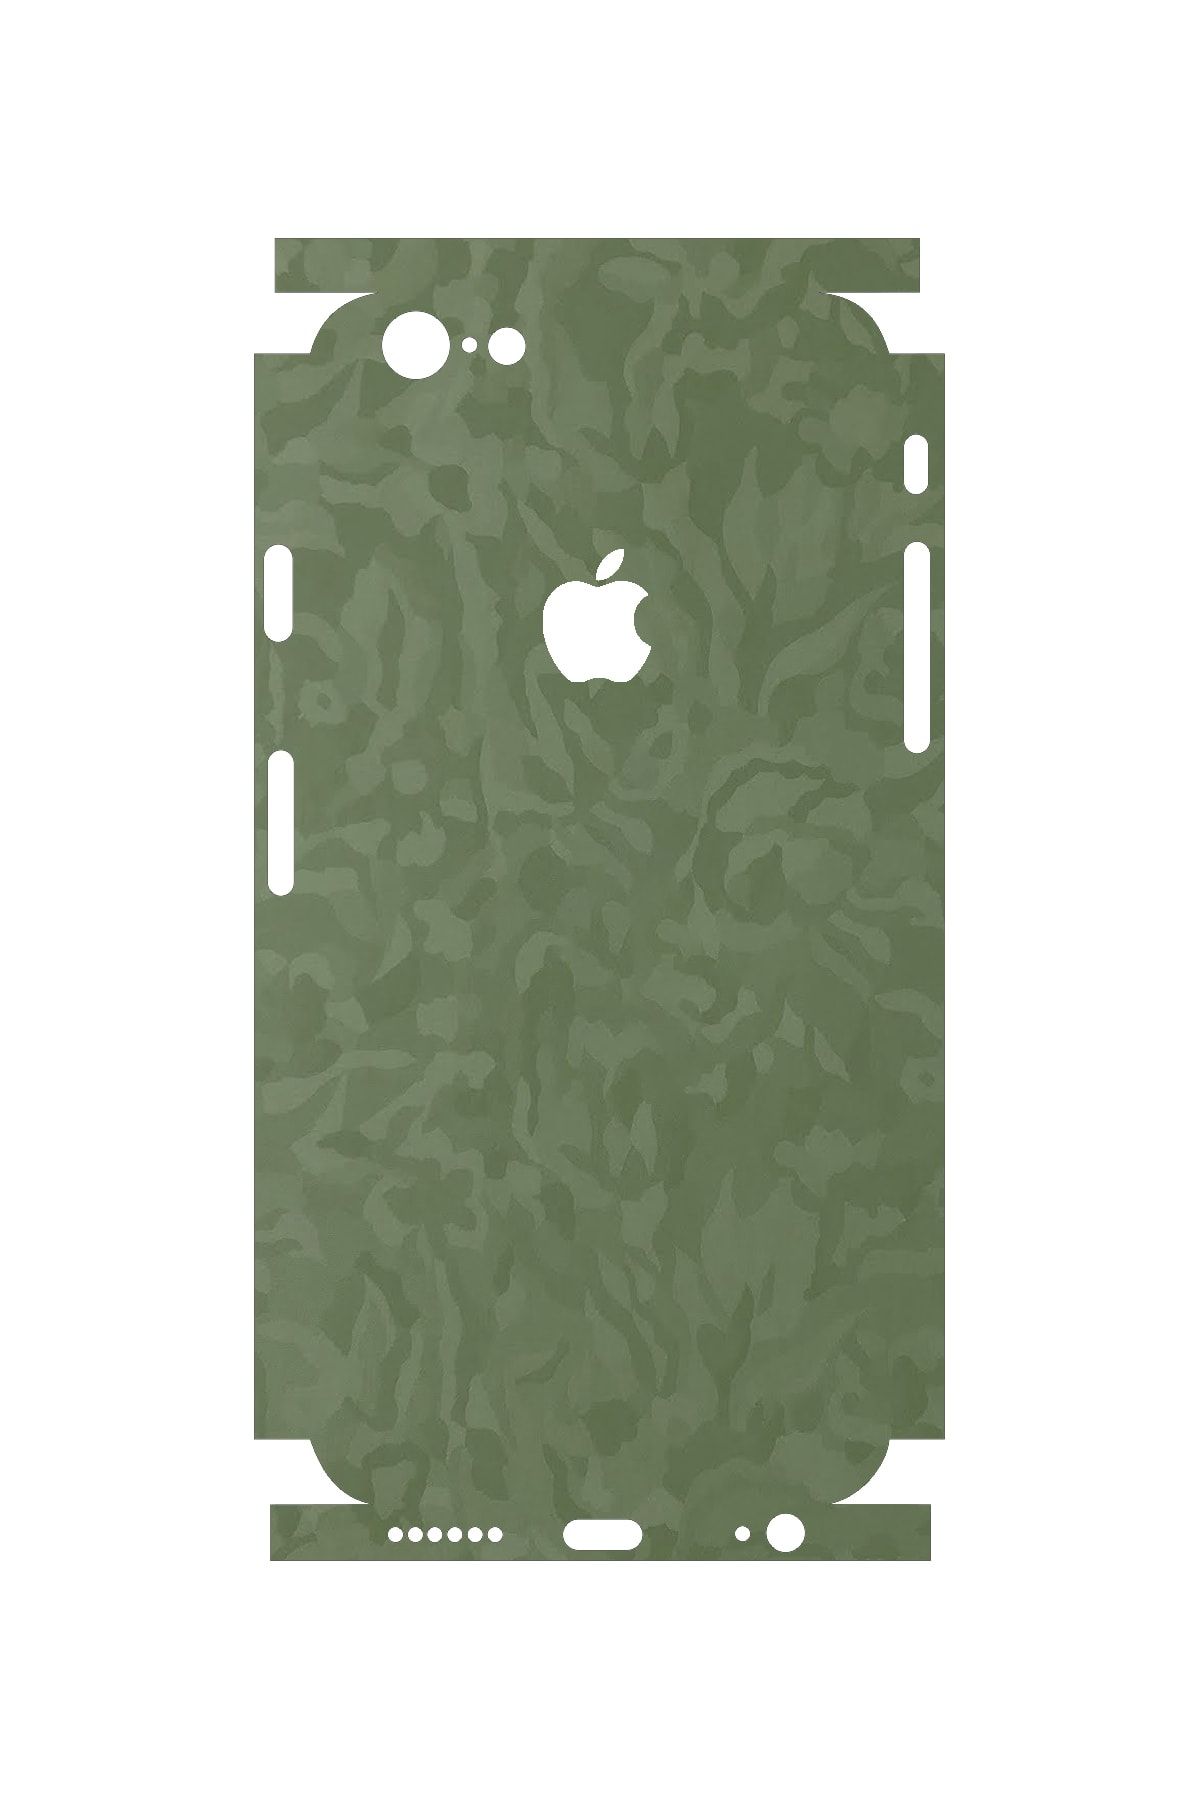 NANOSPACE Apple Iphone 6 Plus Kamuflaj Telefon Kaplaması Full Cover 3m Sticker Kaplama